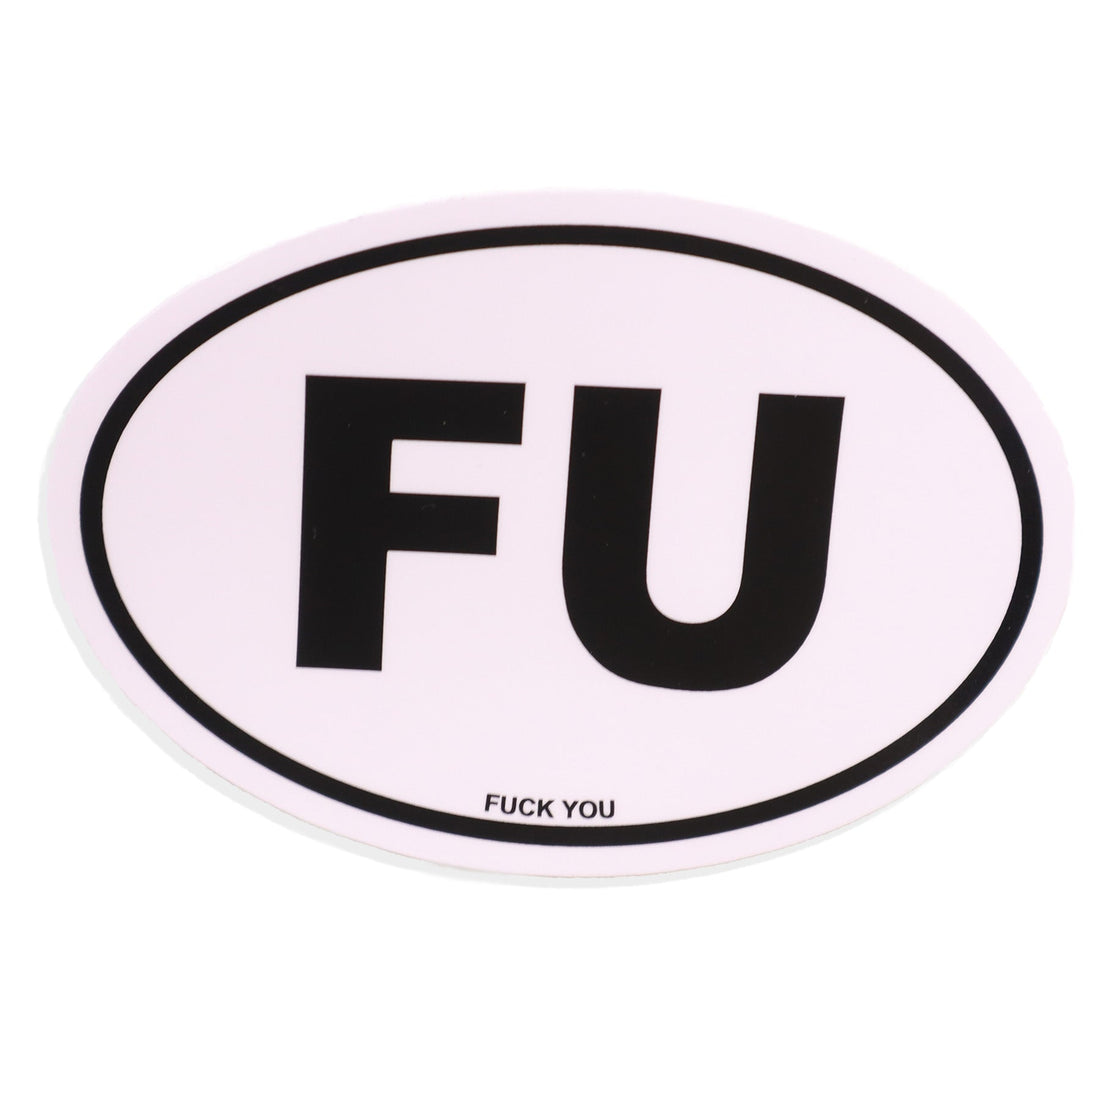 Supplies - Identification - Stickers - Violent Little FU "Fuck You" Oval Sticker